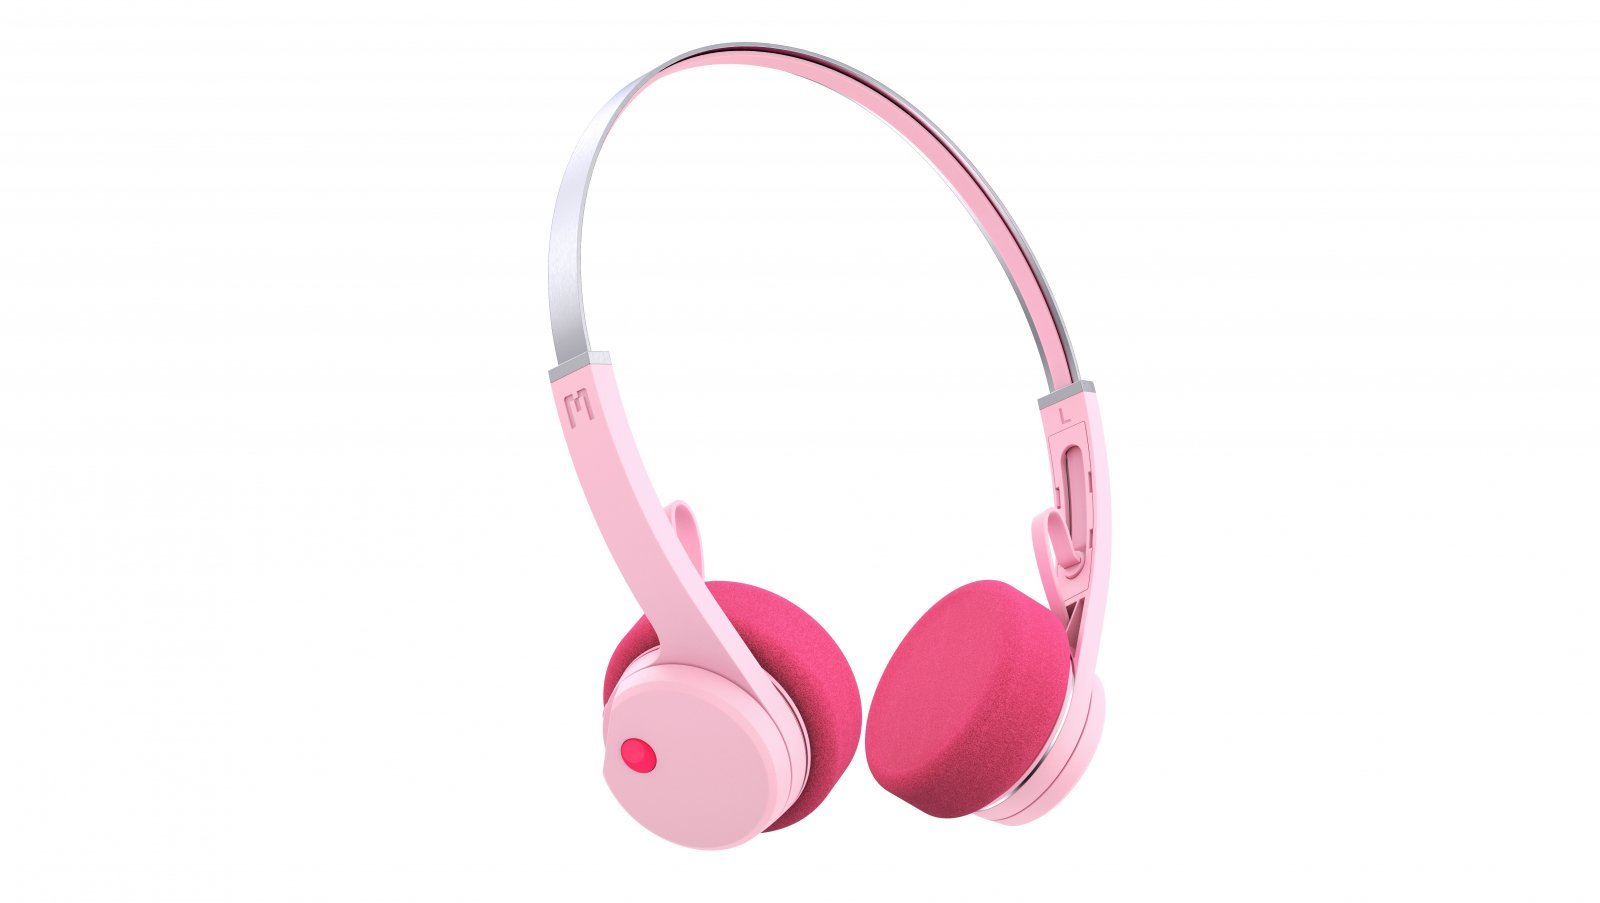 mondo-freestyle-headphones-hero-pink-pink.jpg